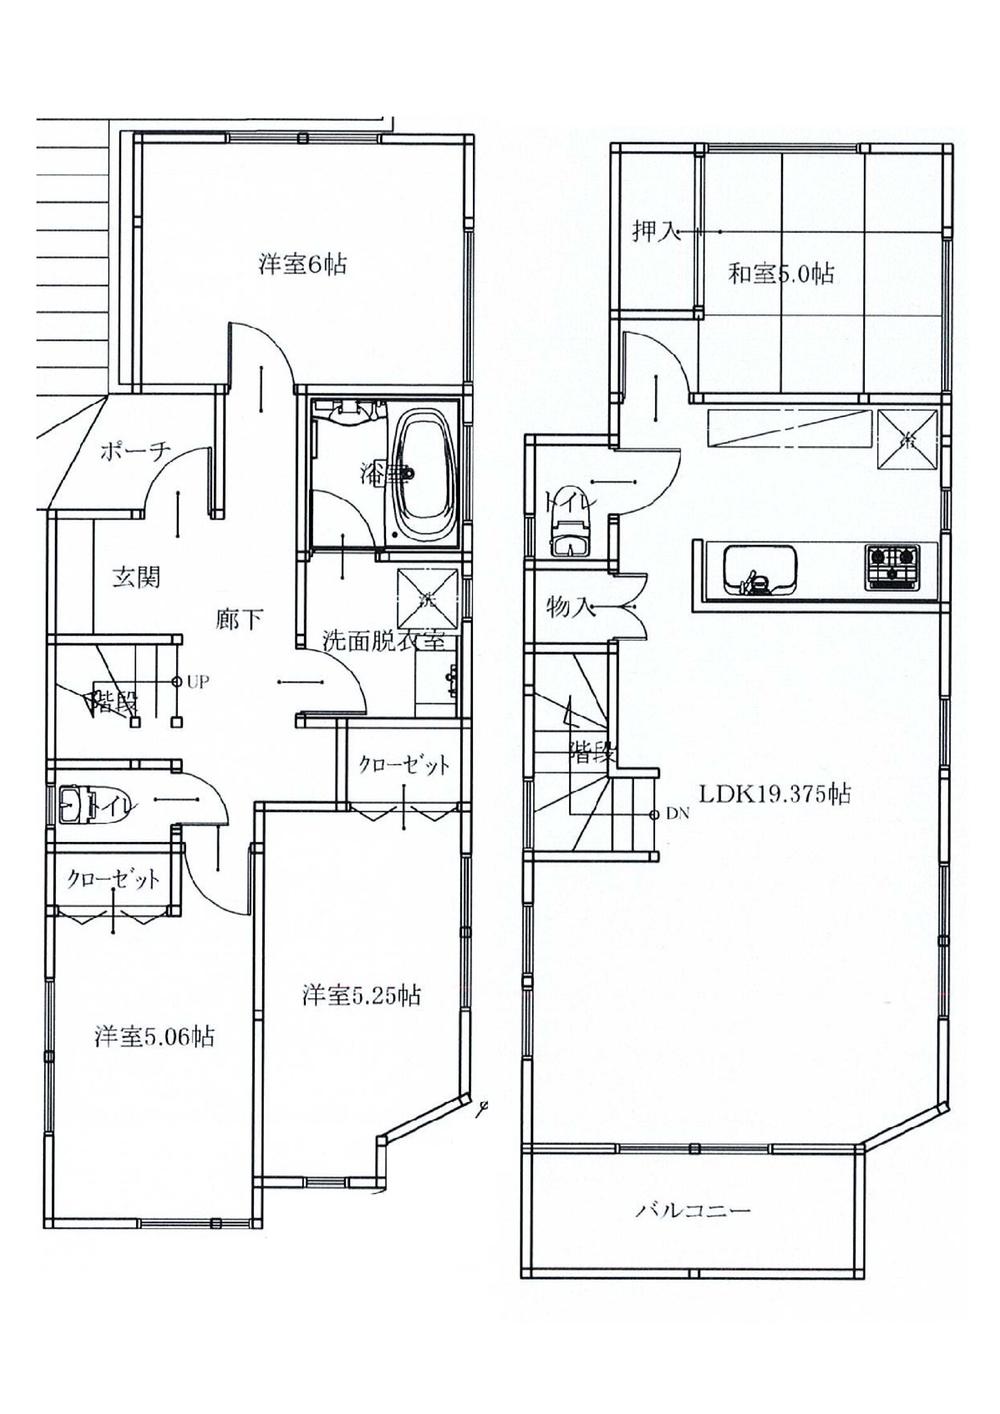 Building plan example (floor plan). Building plan example (10 Building) 4LDK, Land price 20,300,000 yen, Land area 102.56 sq m , Building price 15 million yen, Building area 93.78 sq m